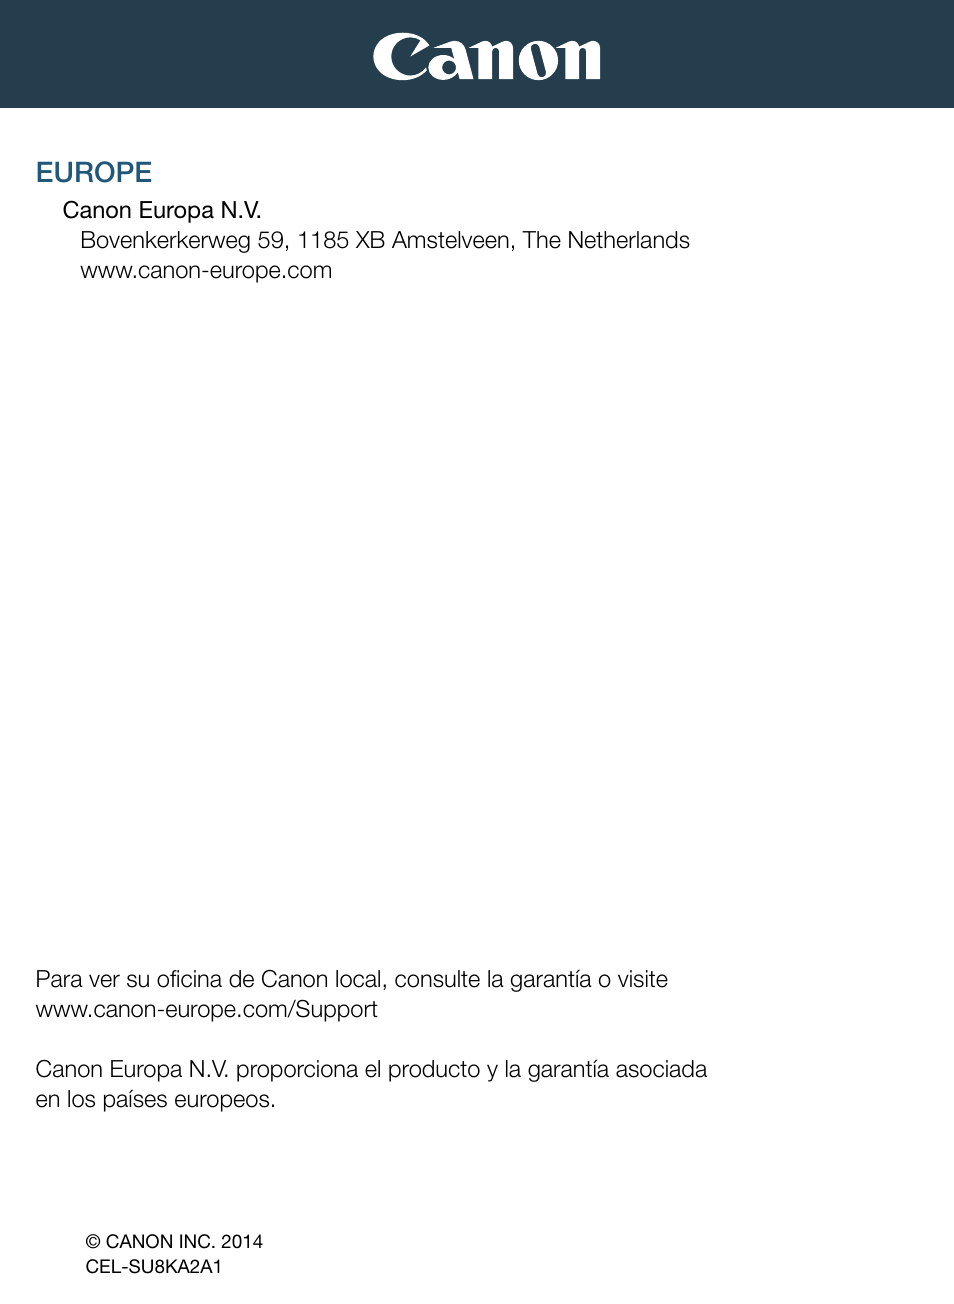 Cover 4, Europe | Canon LEGRIA mini Manual del usuario | Página 256 / 256